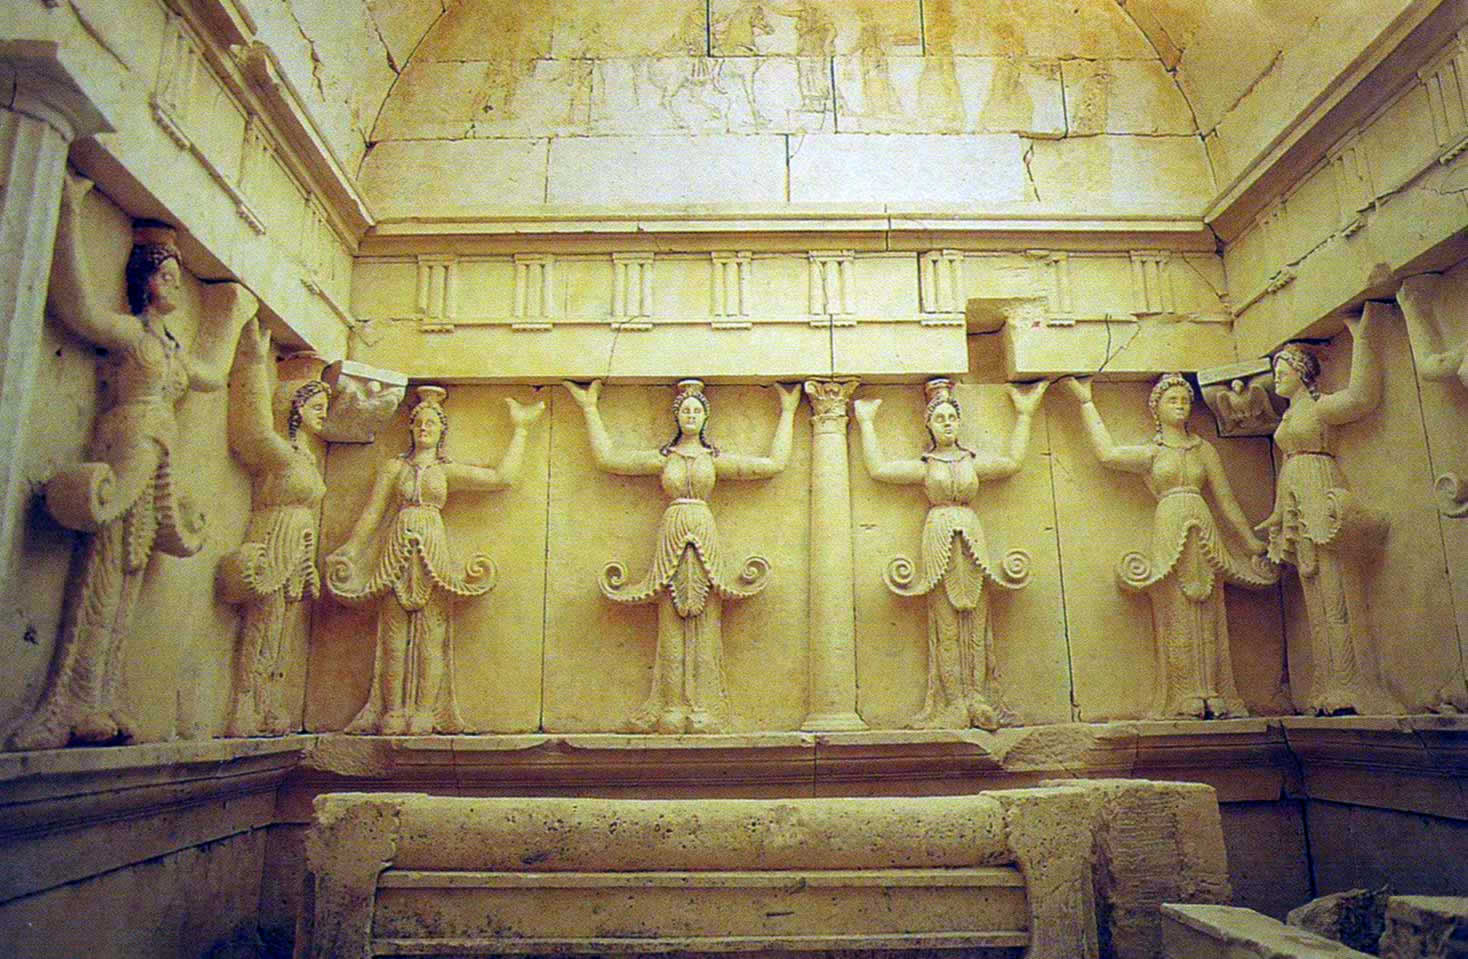 Thracian Tomb of Sveshtari